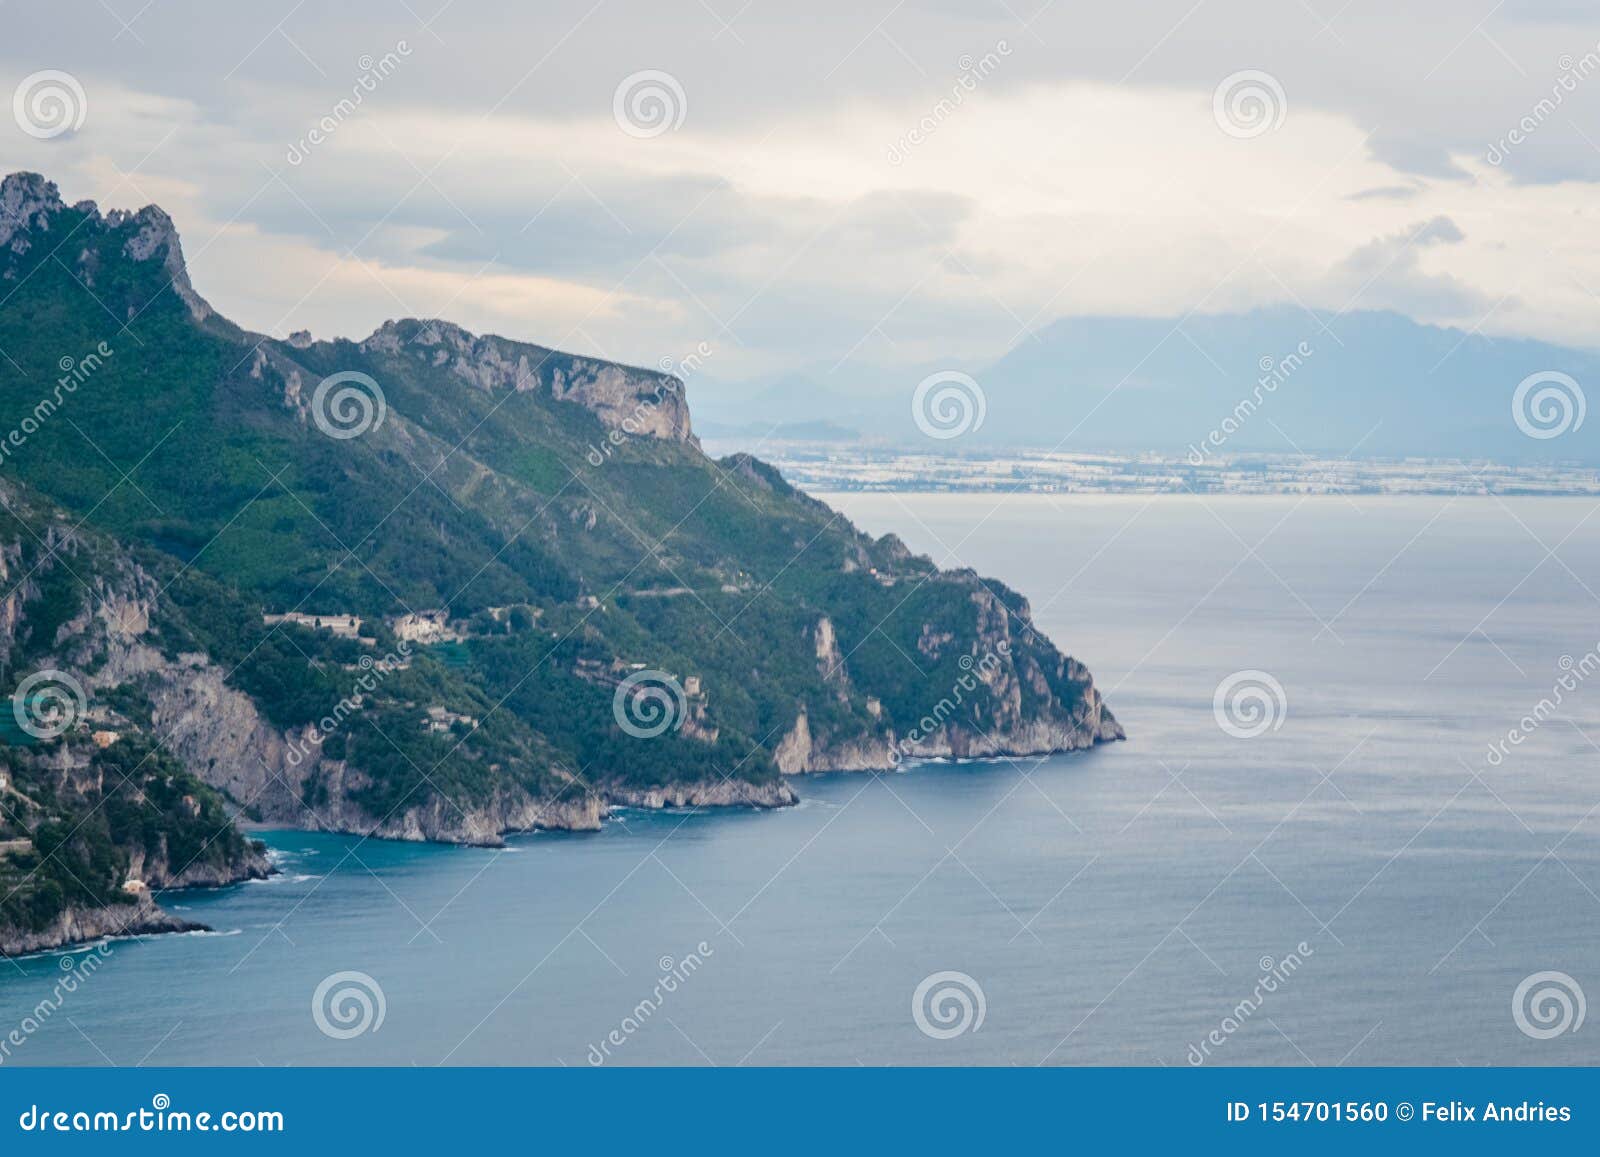 coastal view seen from the terrace of infinity or terrazza dell`infinito, villa cimbrone, ravello village, amalfi coast of italy